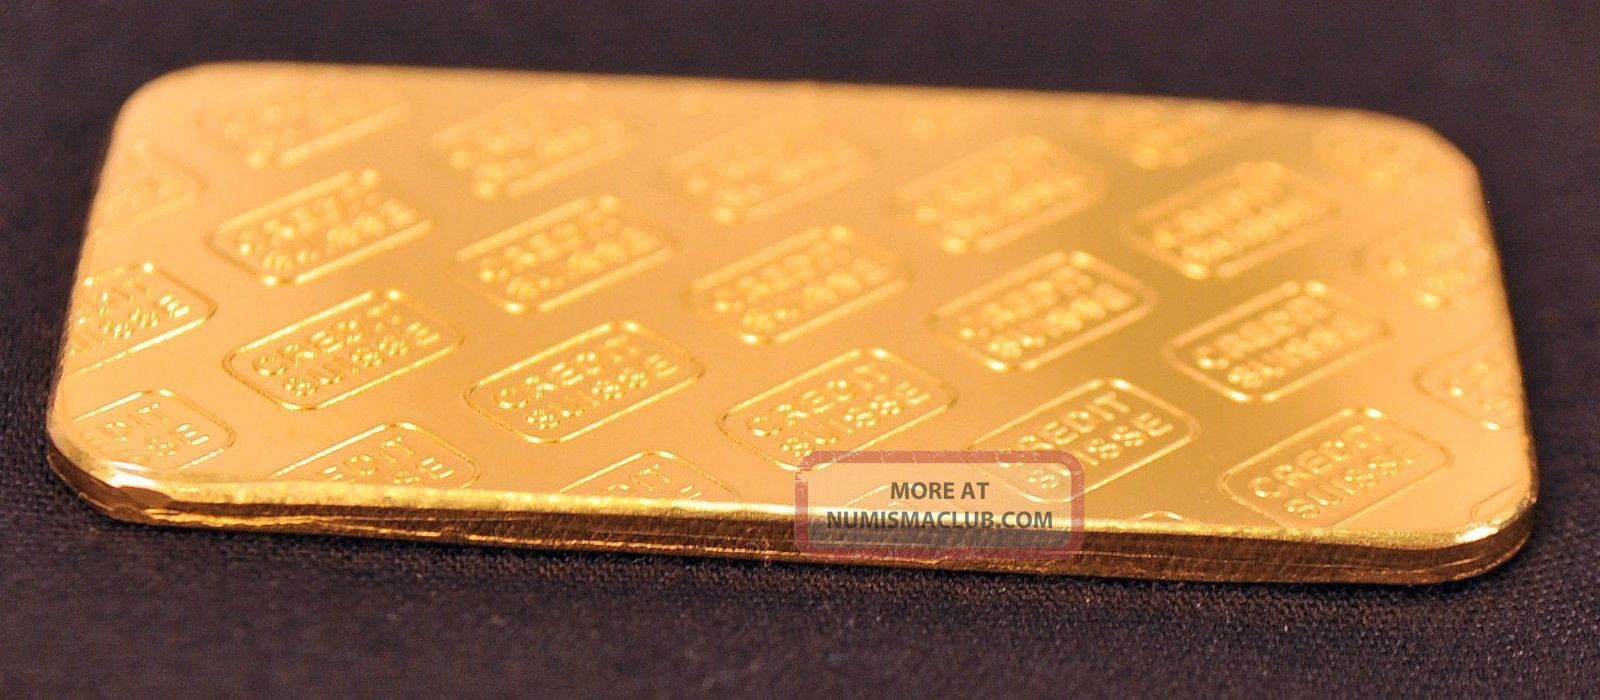 credit suisse gold bar packet